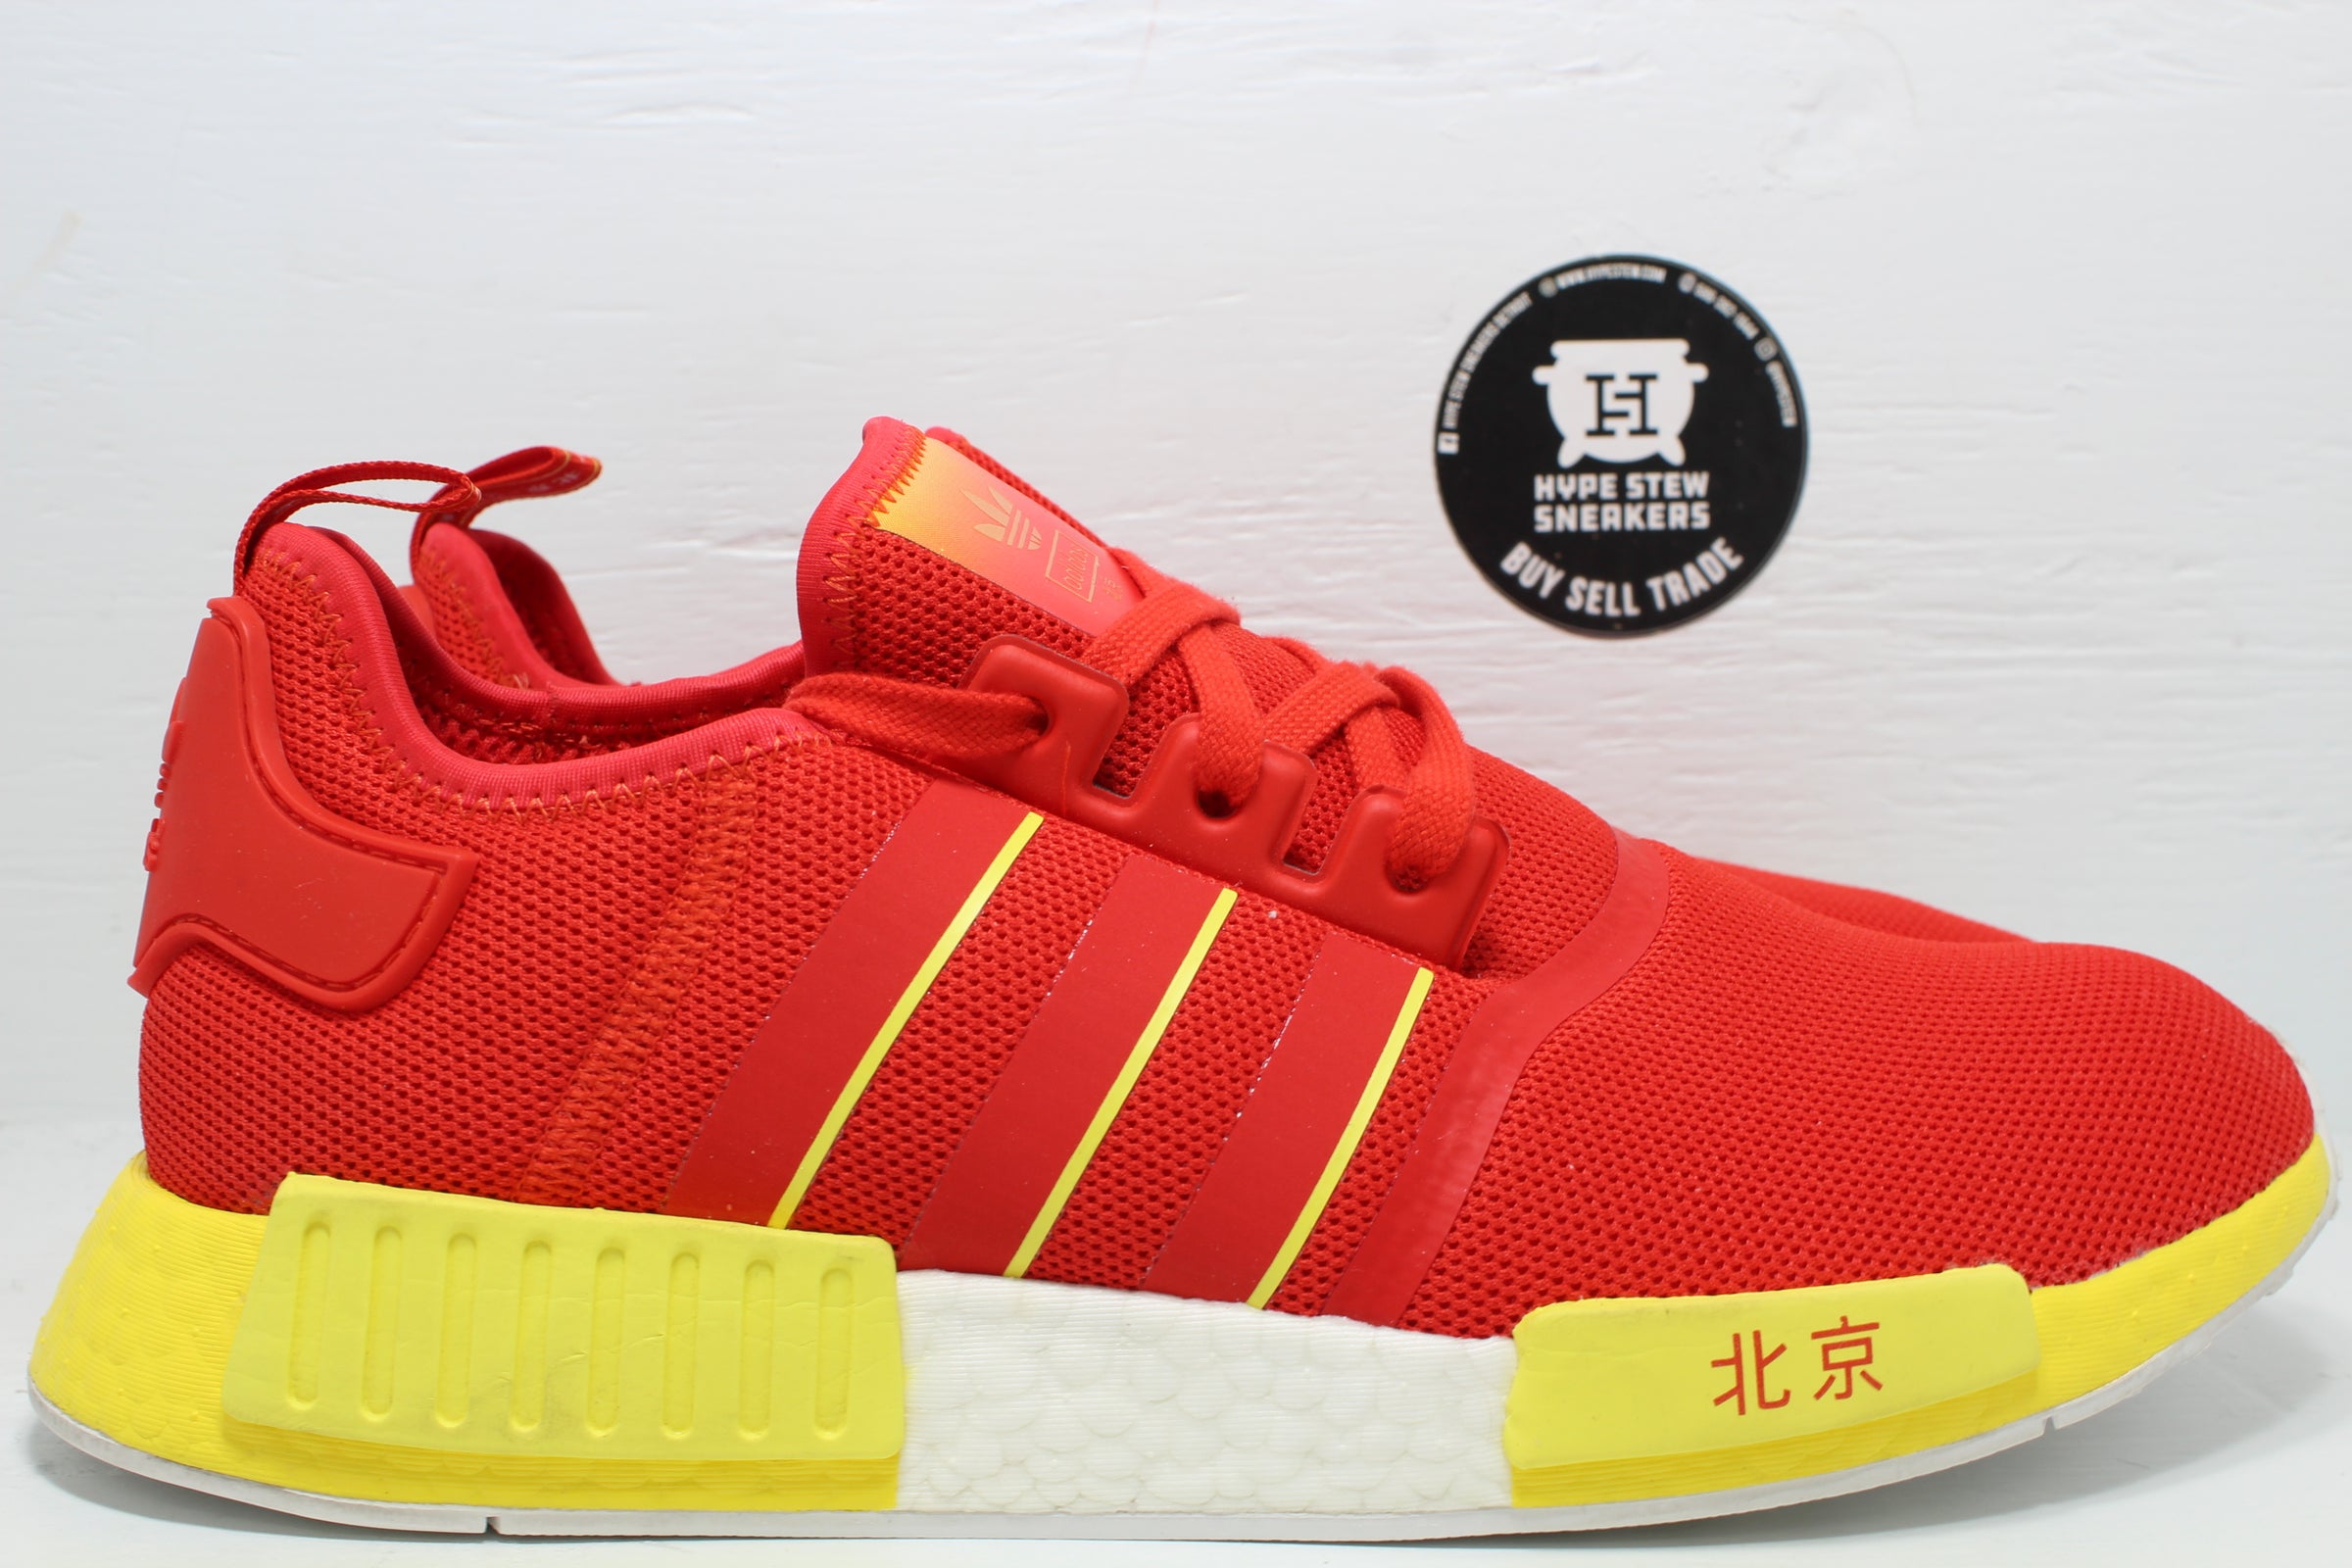 Adidas R1 Beijing | Hype Sneakers Detroit